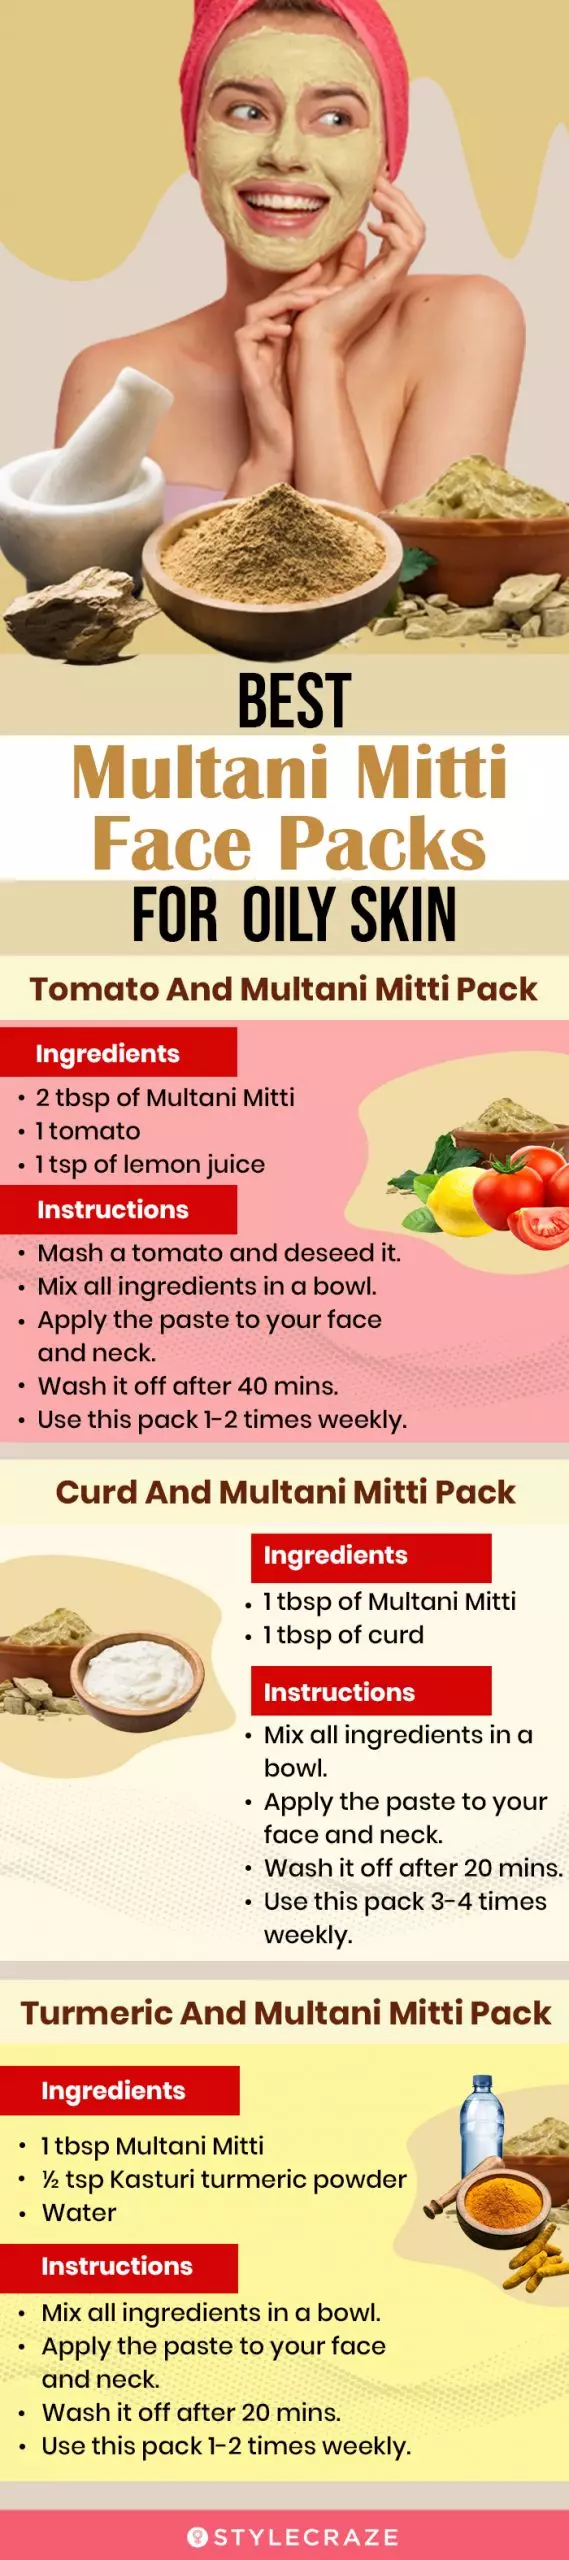 best multani mitti face packs for oily skin (infographic)